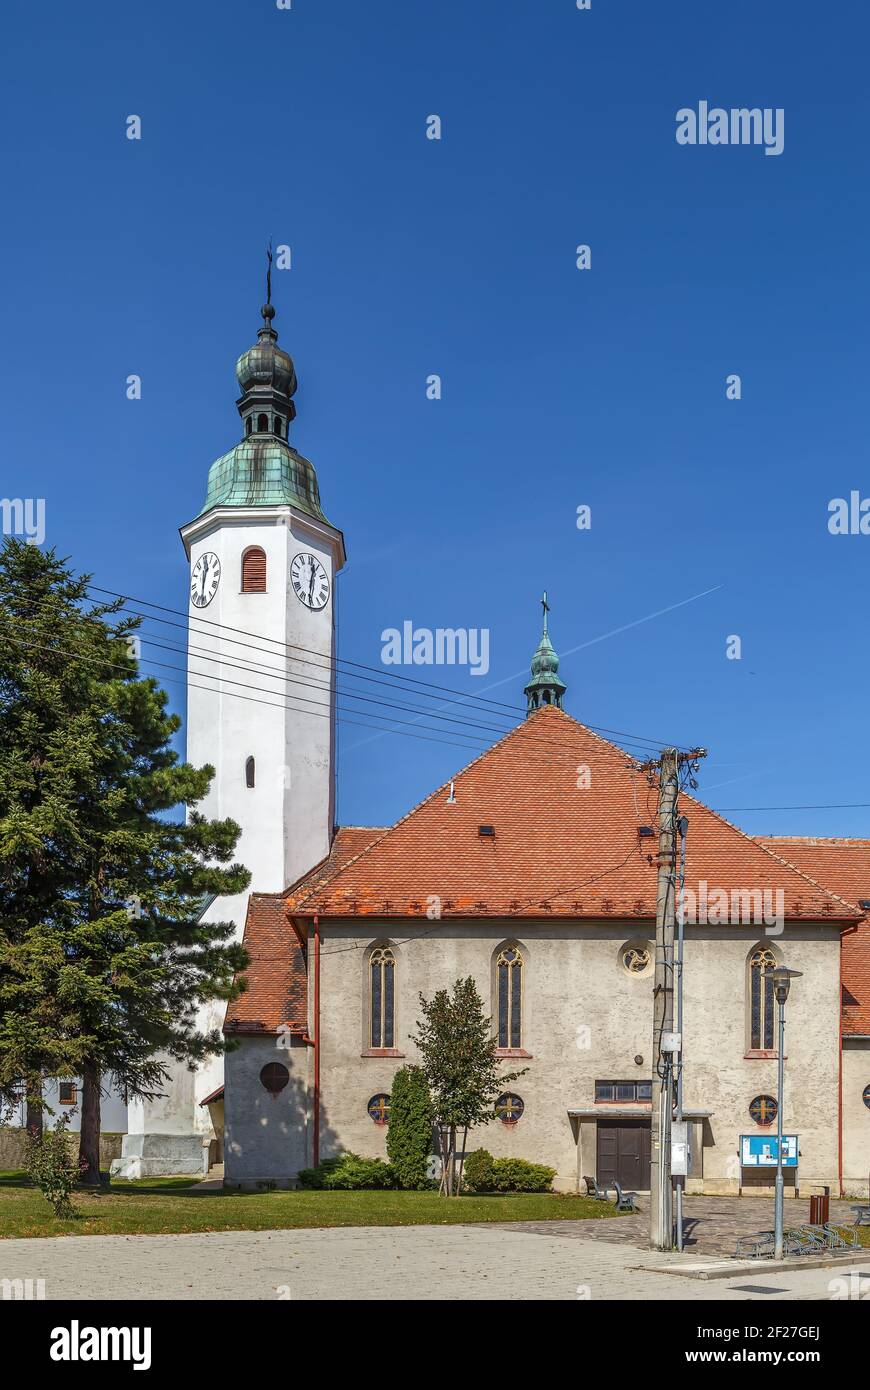 Church of st. Imrich, Casta, Slovakia Stock Photo